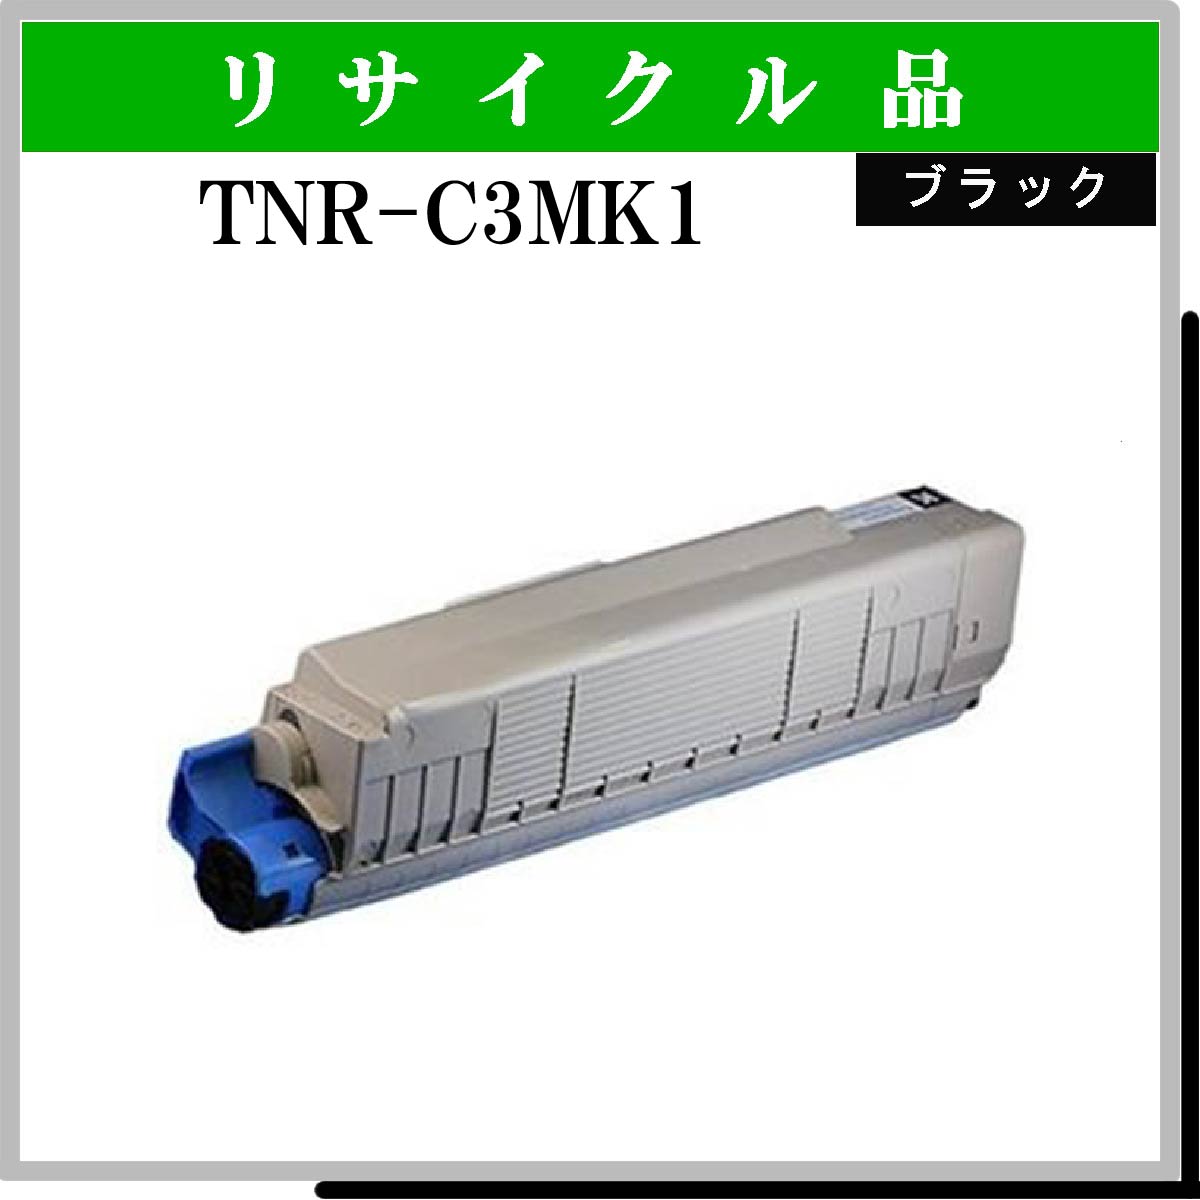 TNR-C3MK1